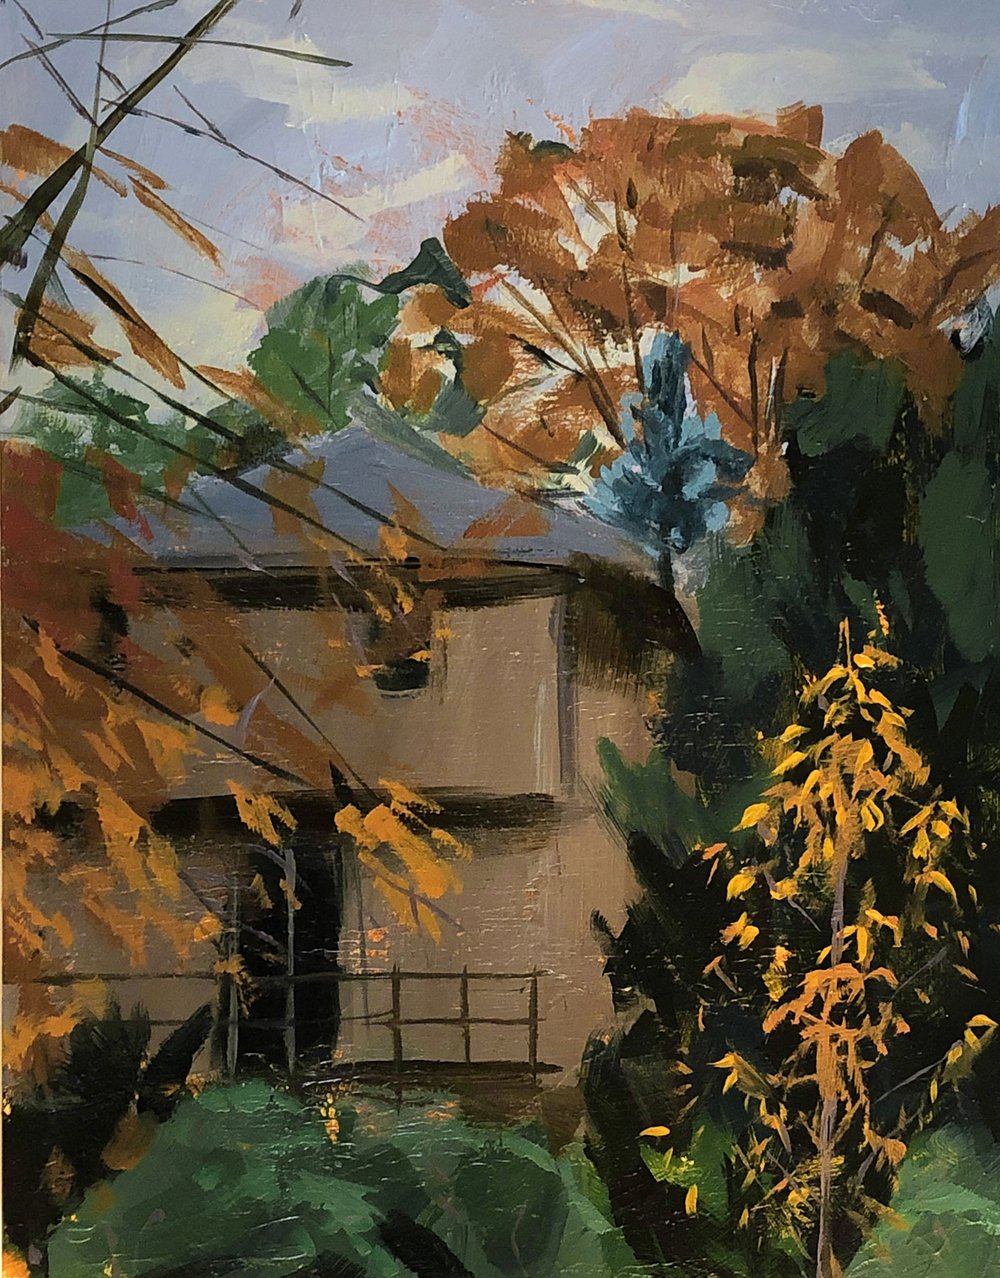  Gold Leaves, acrylic on wood panel, 14” x 11” $700 